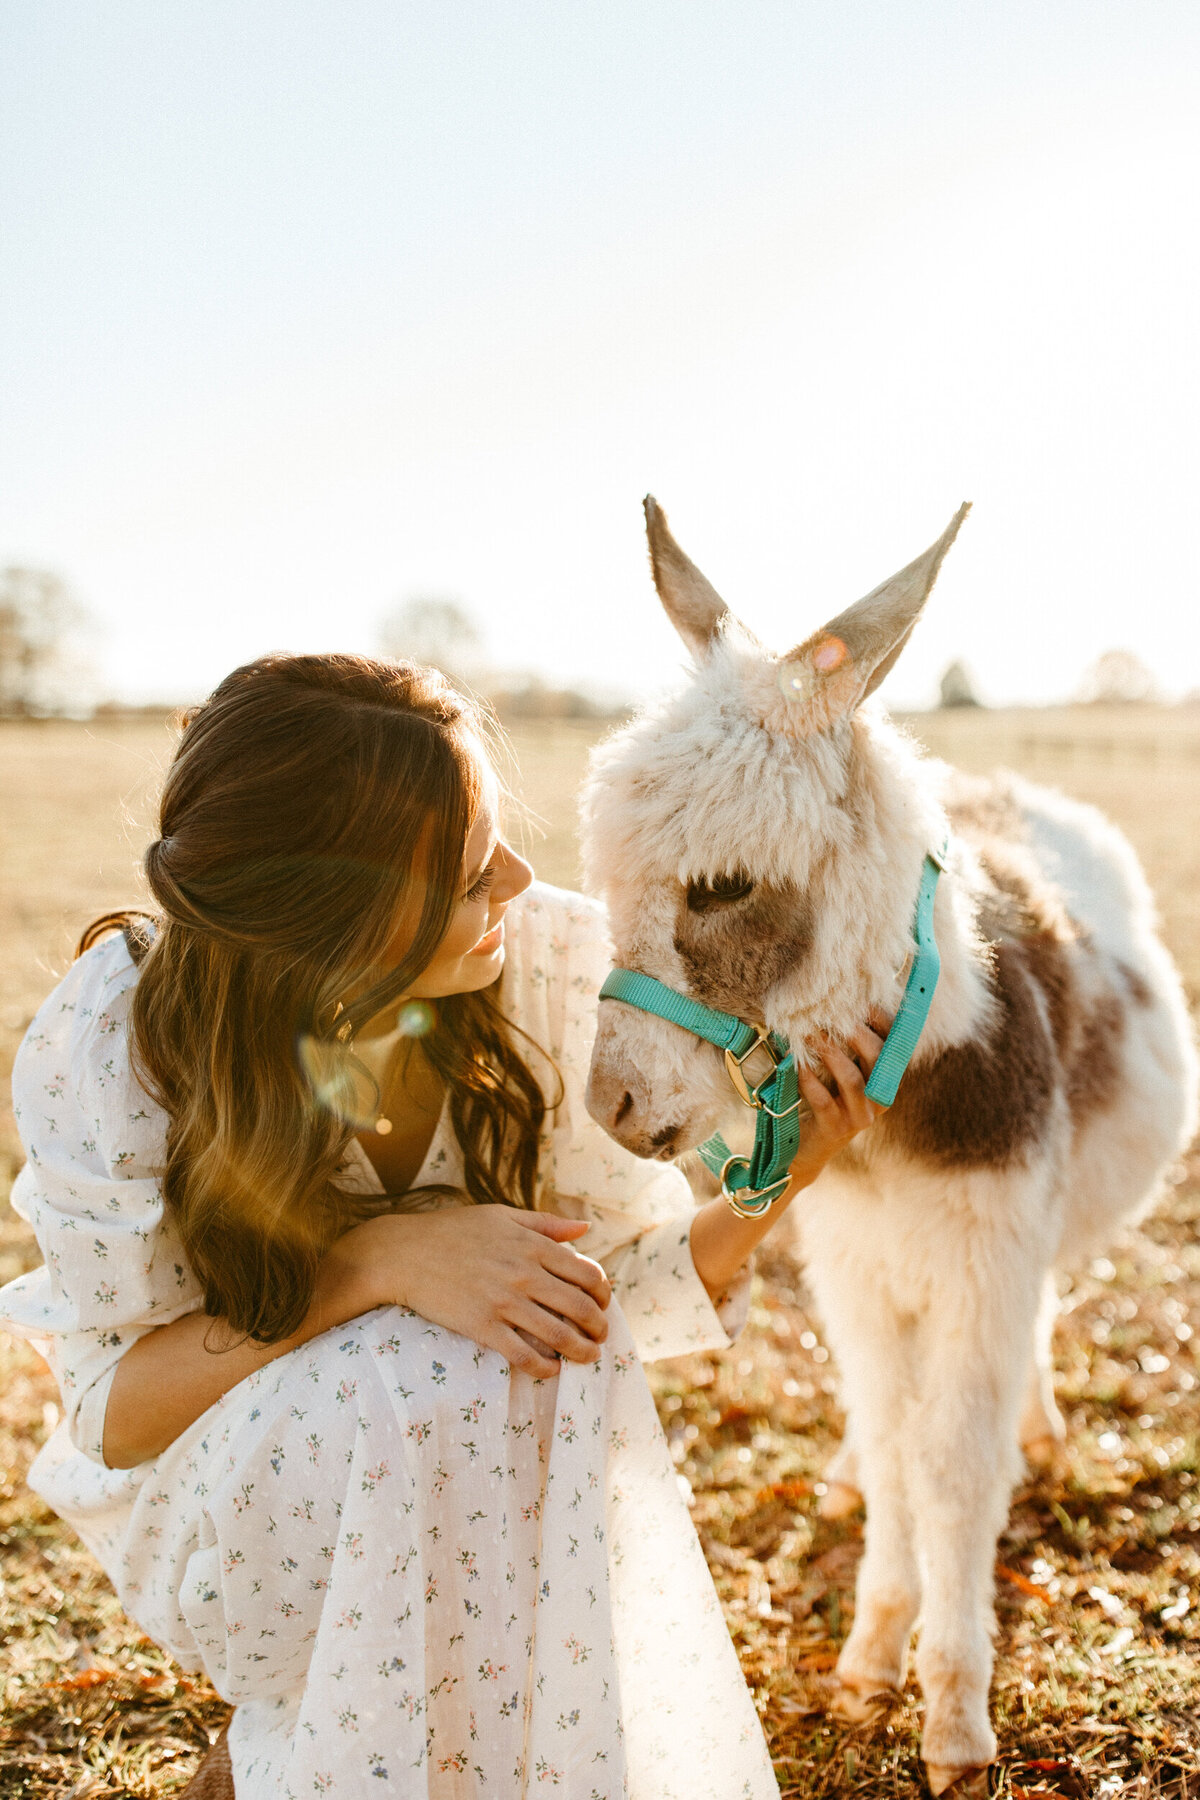 Senior girl on farm with donkey